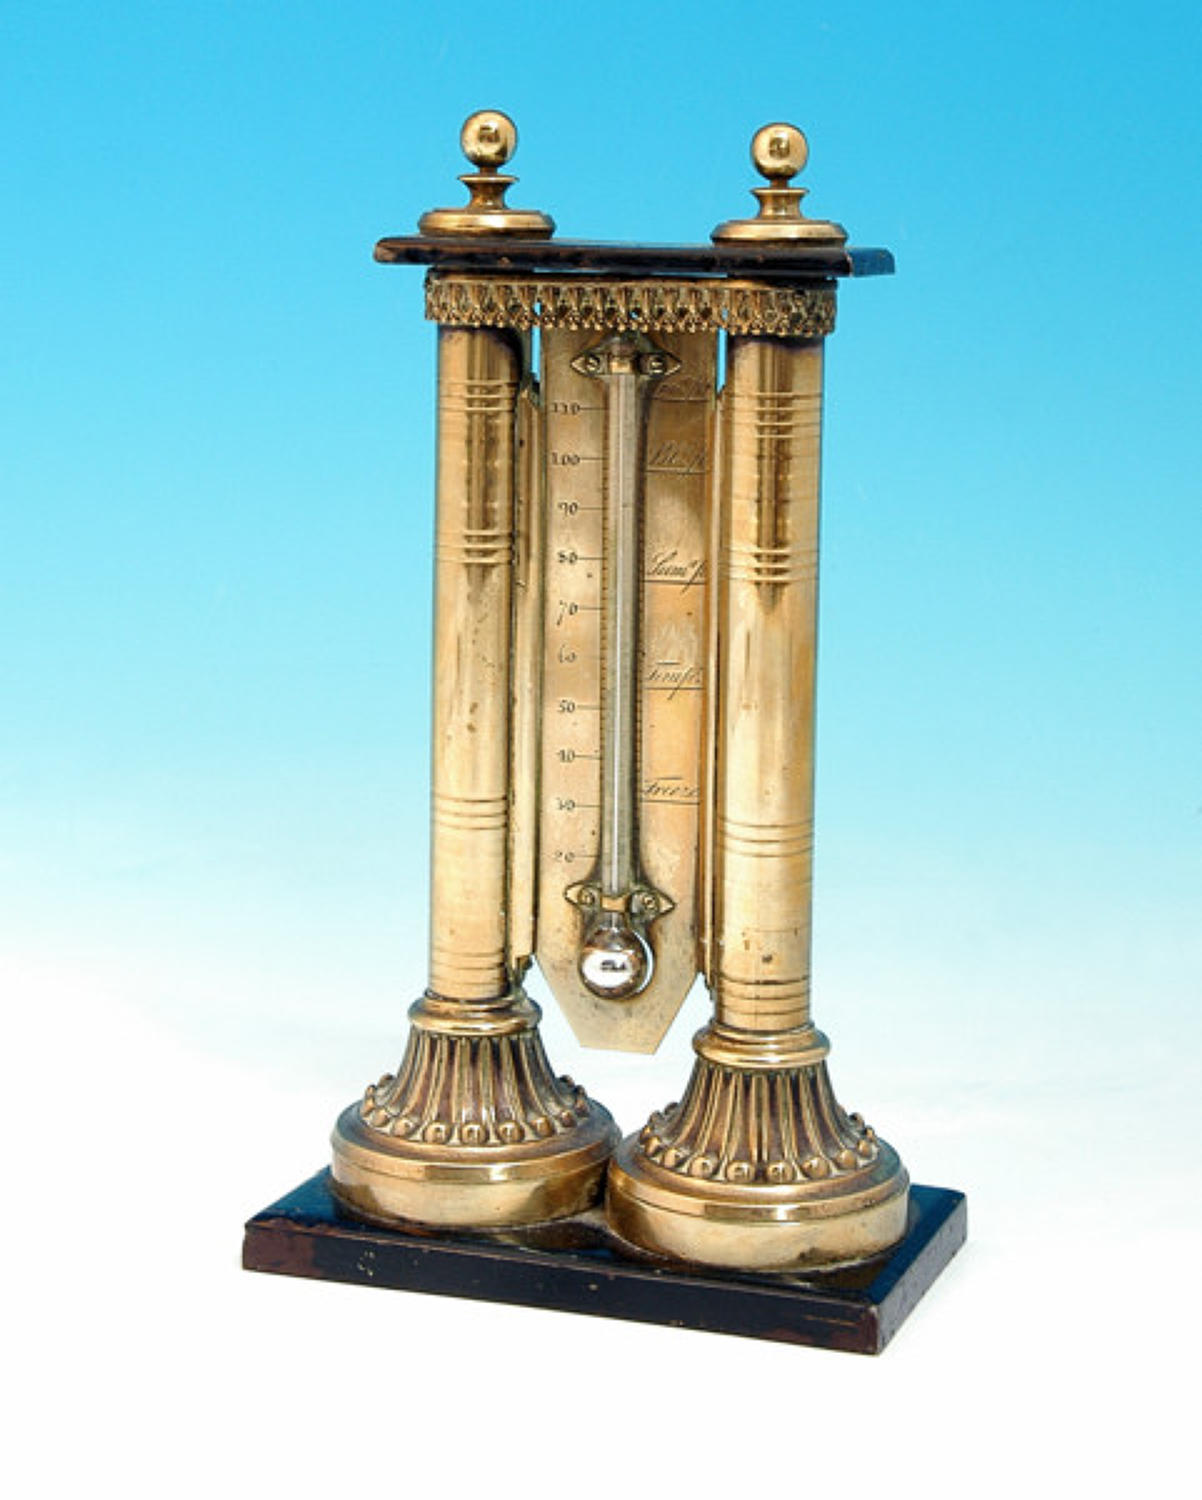 A rare 18thc Iron & Brass Desk Thermometer. English C1780 - 90